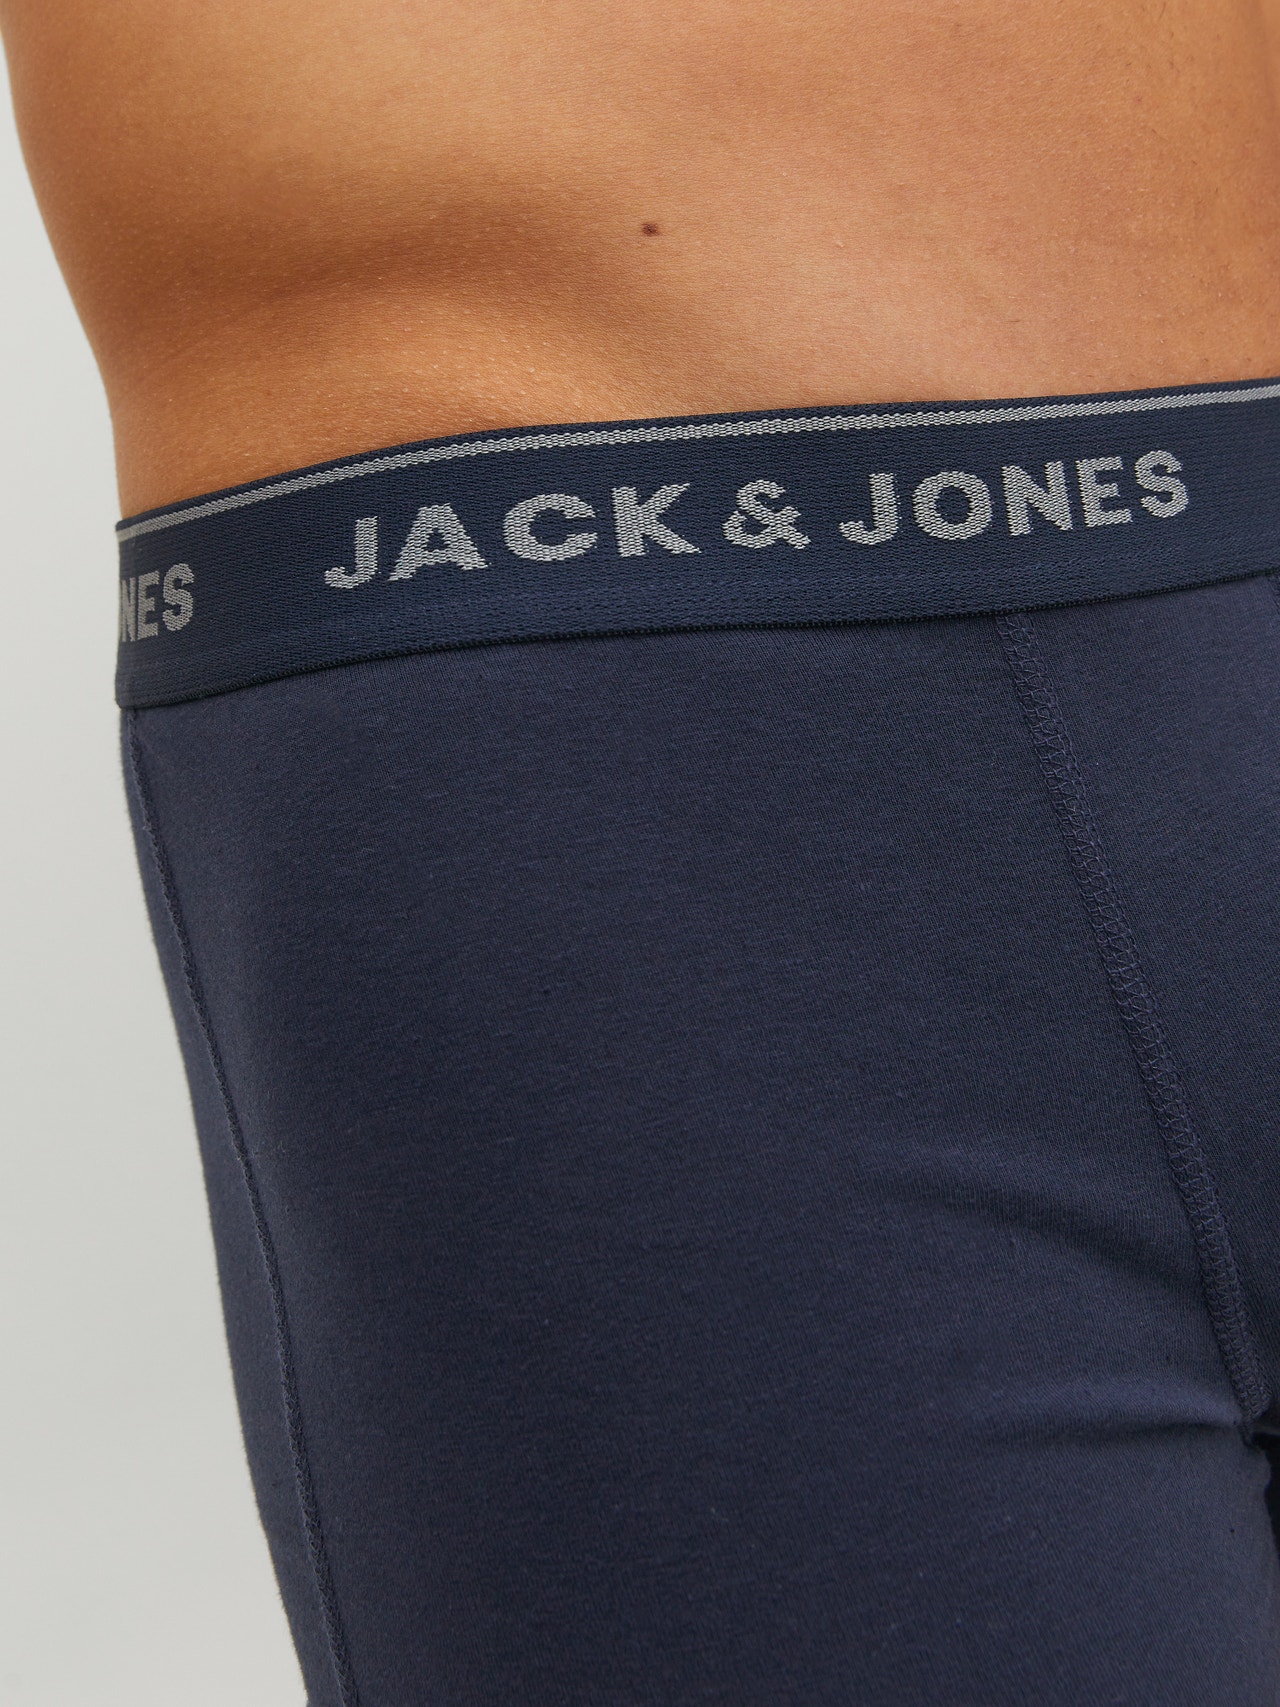 Jack & Jones 2-pak Trunks -Navy Blazer - 12138239